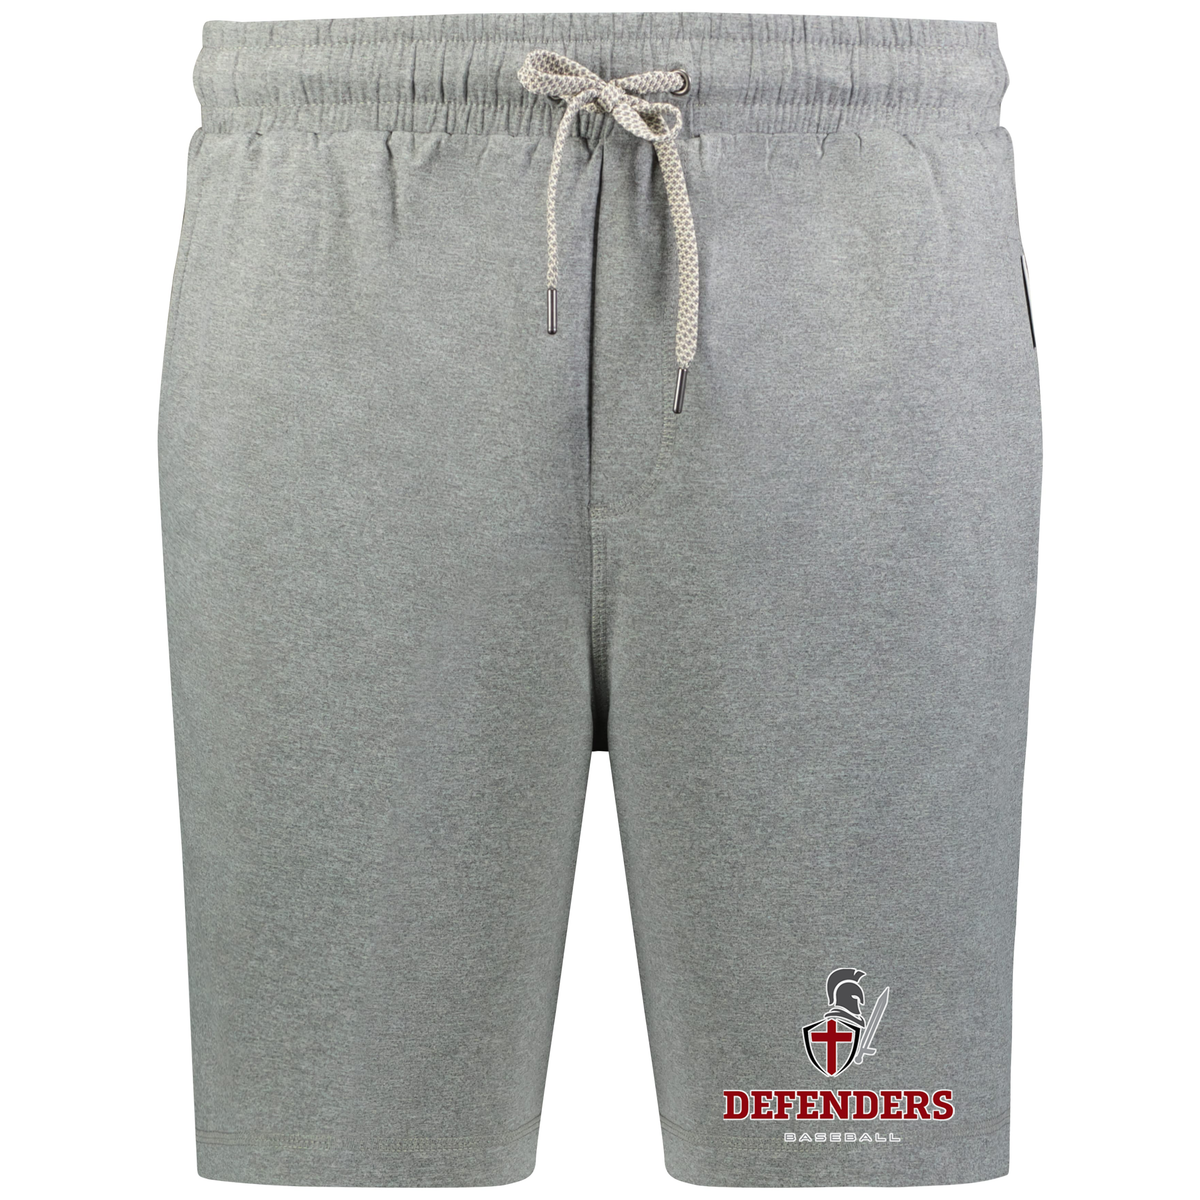 Defenders Baseball Ventura Soft Knit Shorts